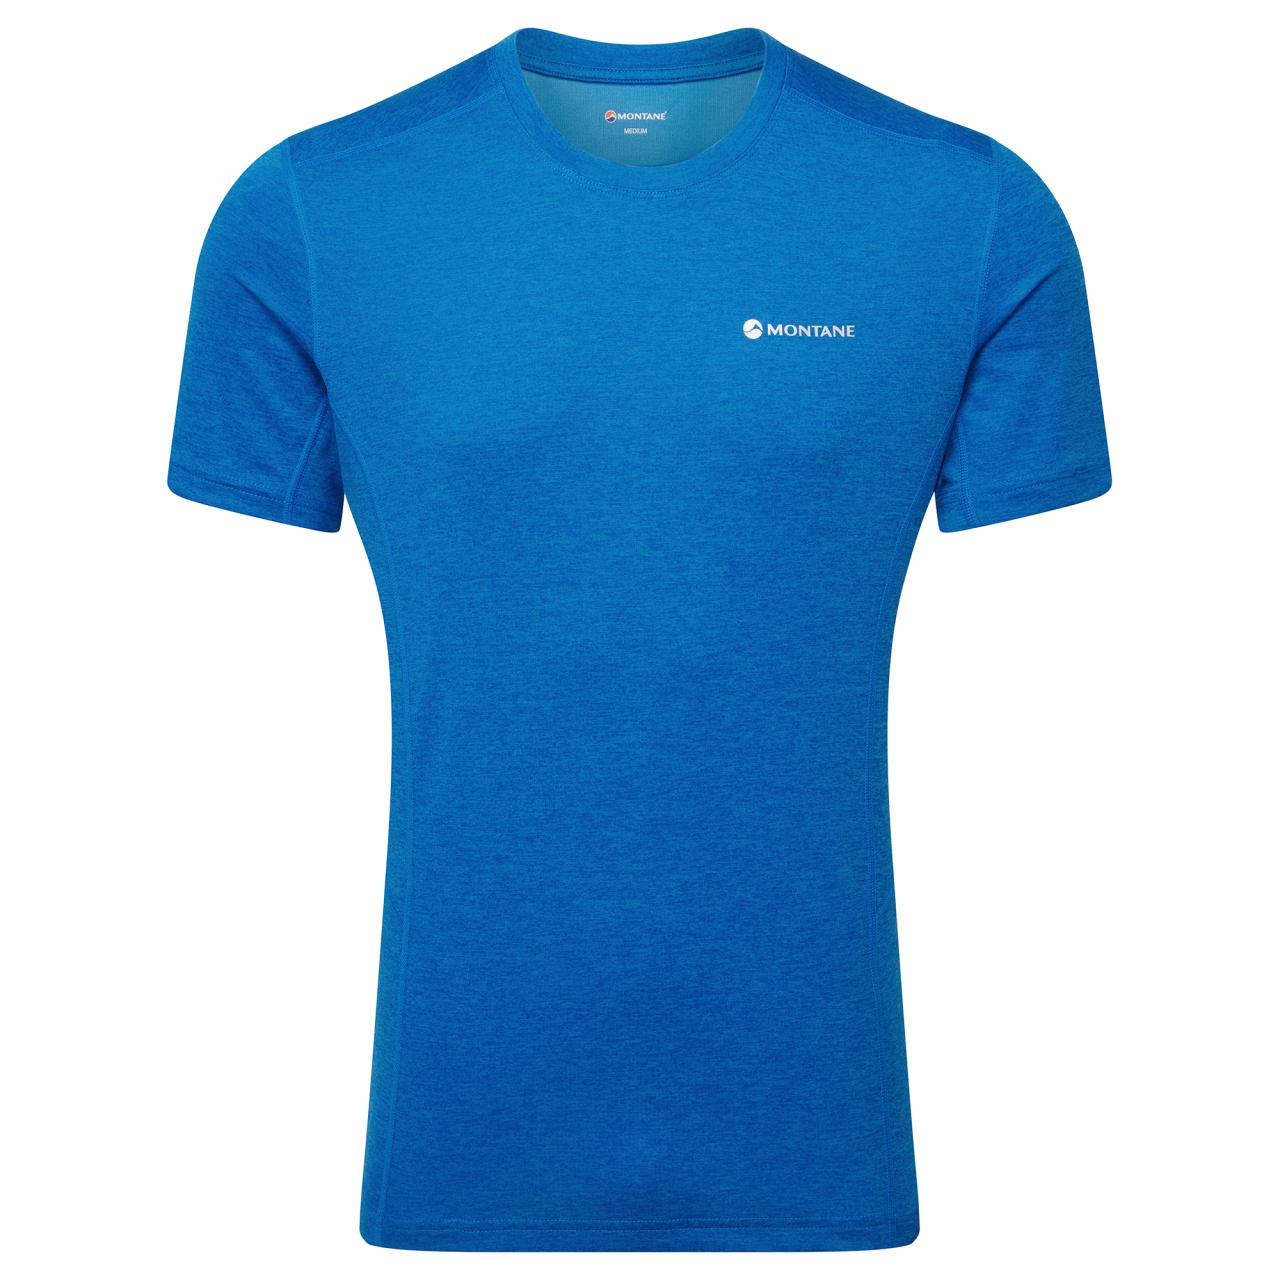 Montane pánské triko Dart T-Shirt Barva: neptune blue, Velikost: L